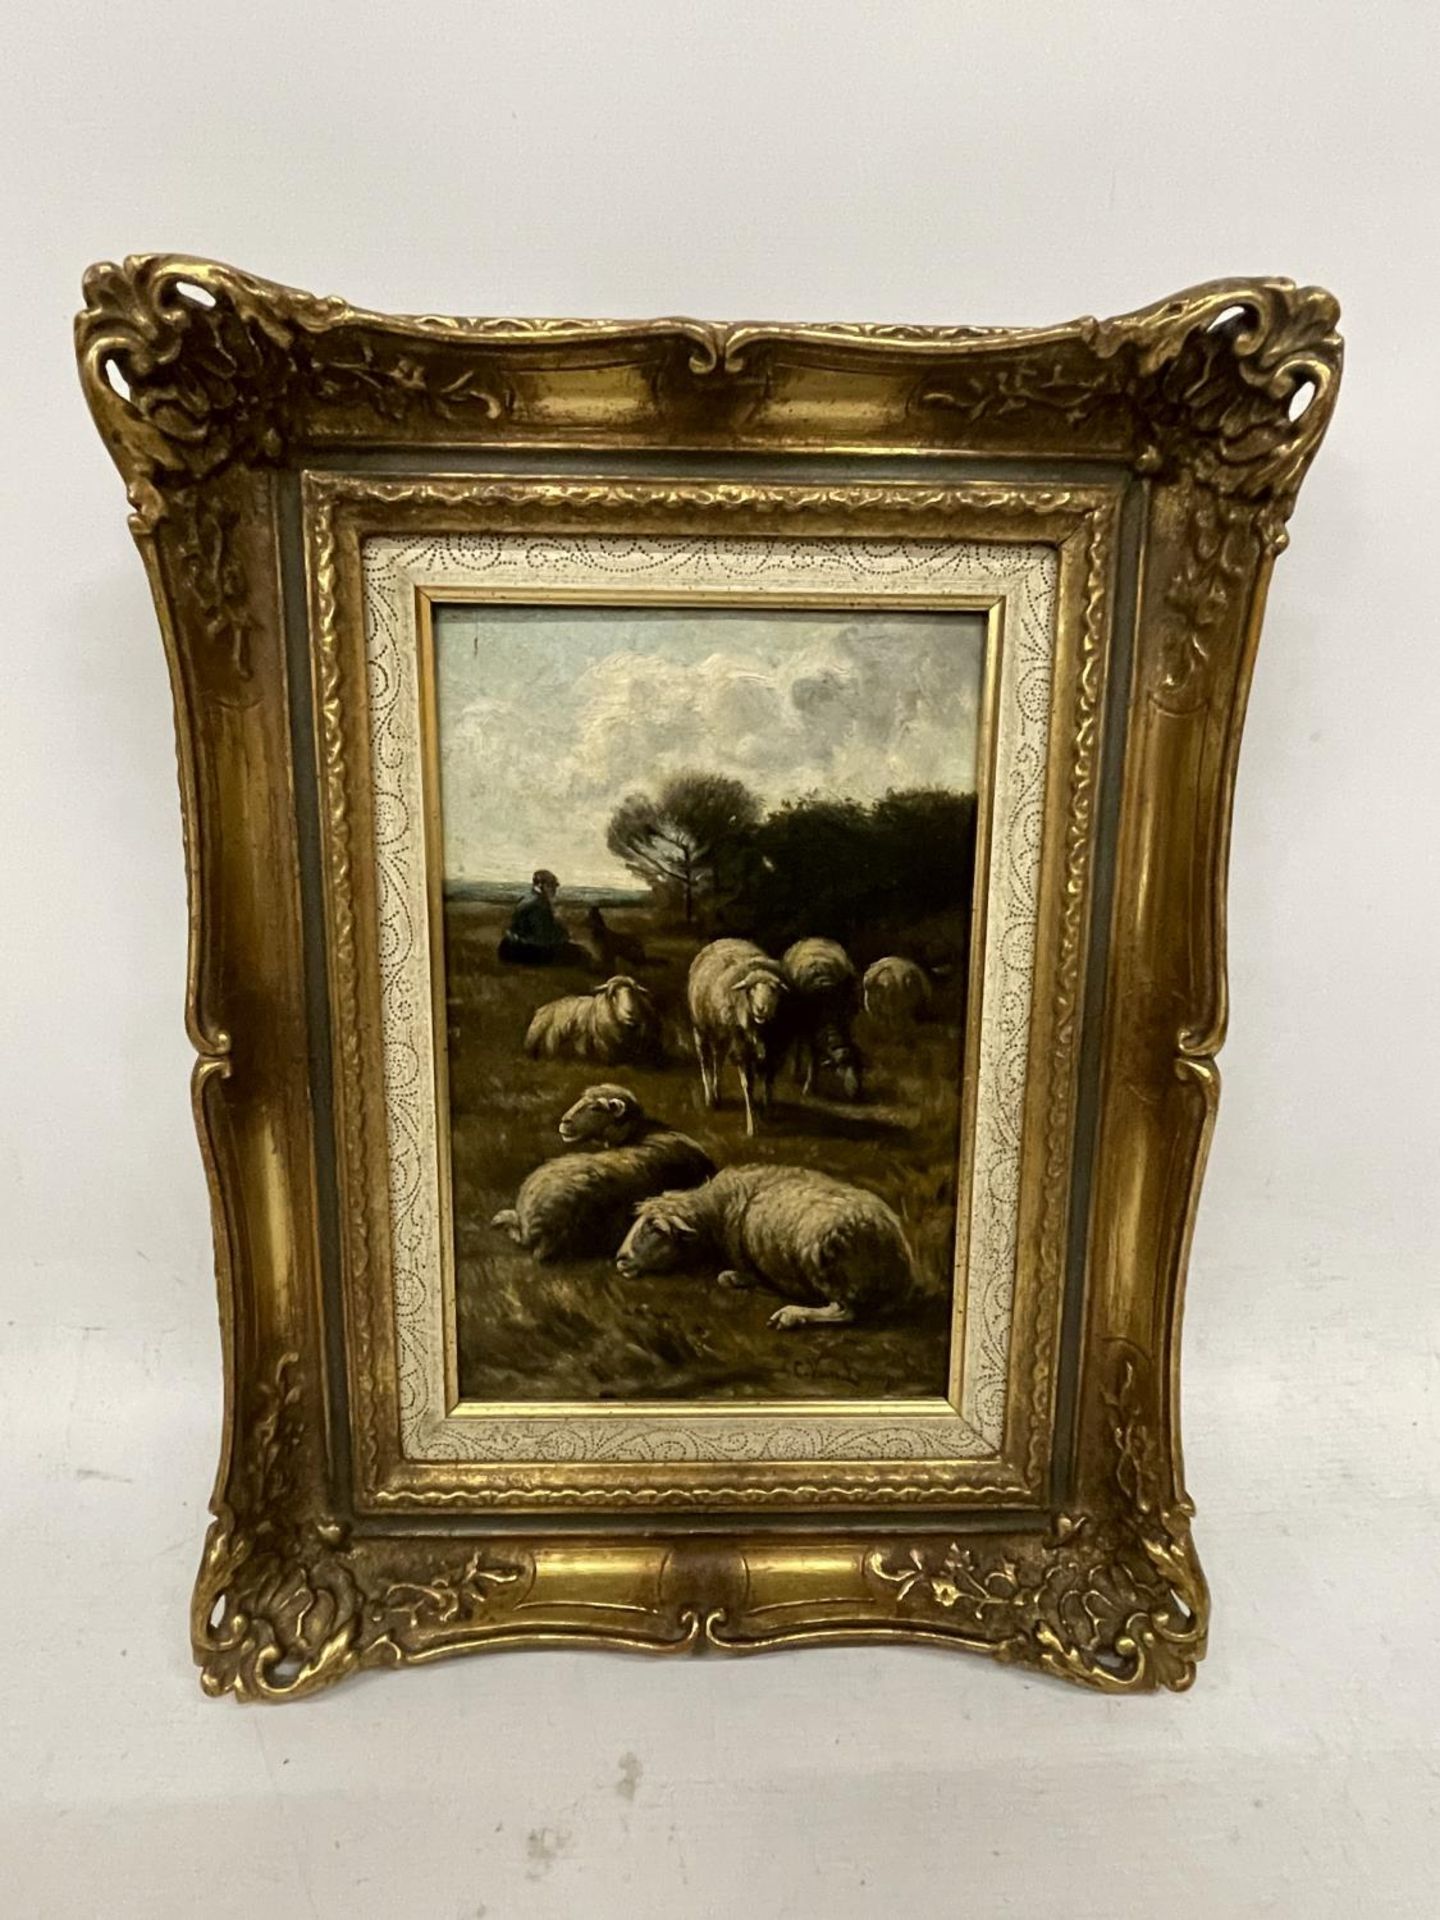 CORNELIUS VAN LEEMPUTEN (BELGIUM 1841- 1902) SHEEP IN A WOODLAND SETTING, OIL ON PANEL, SIGNED, 27CM